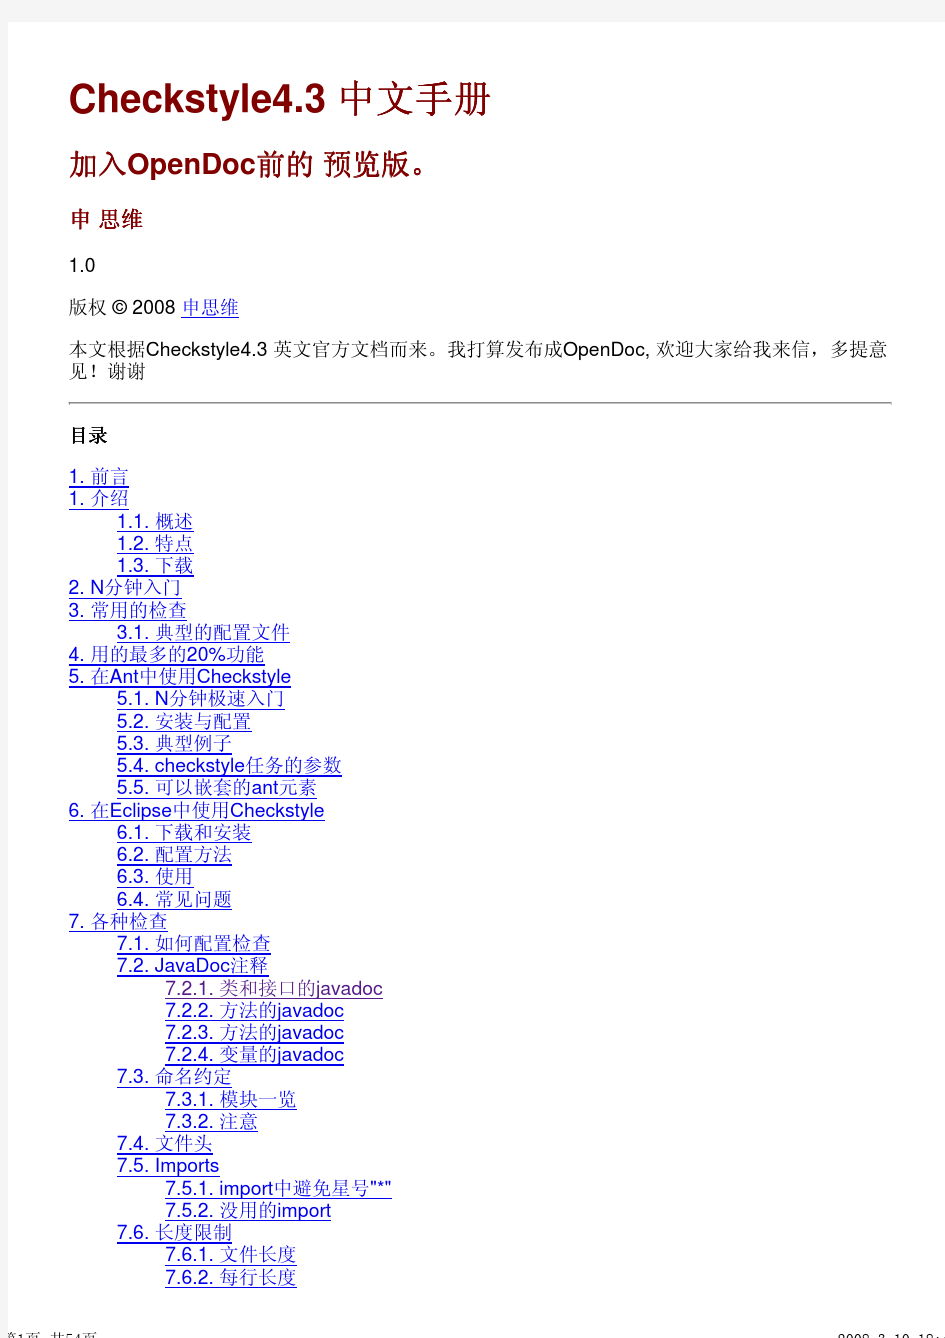 Checkstyle 4.3 中文手册